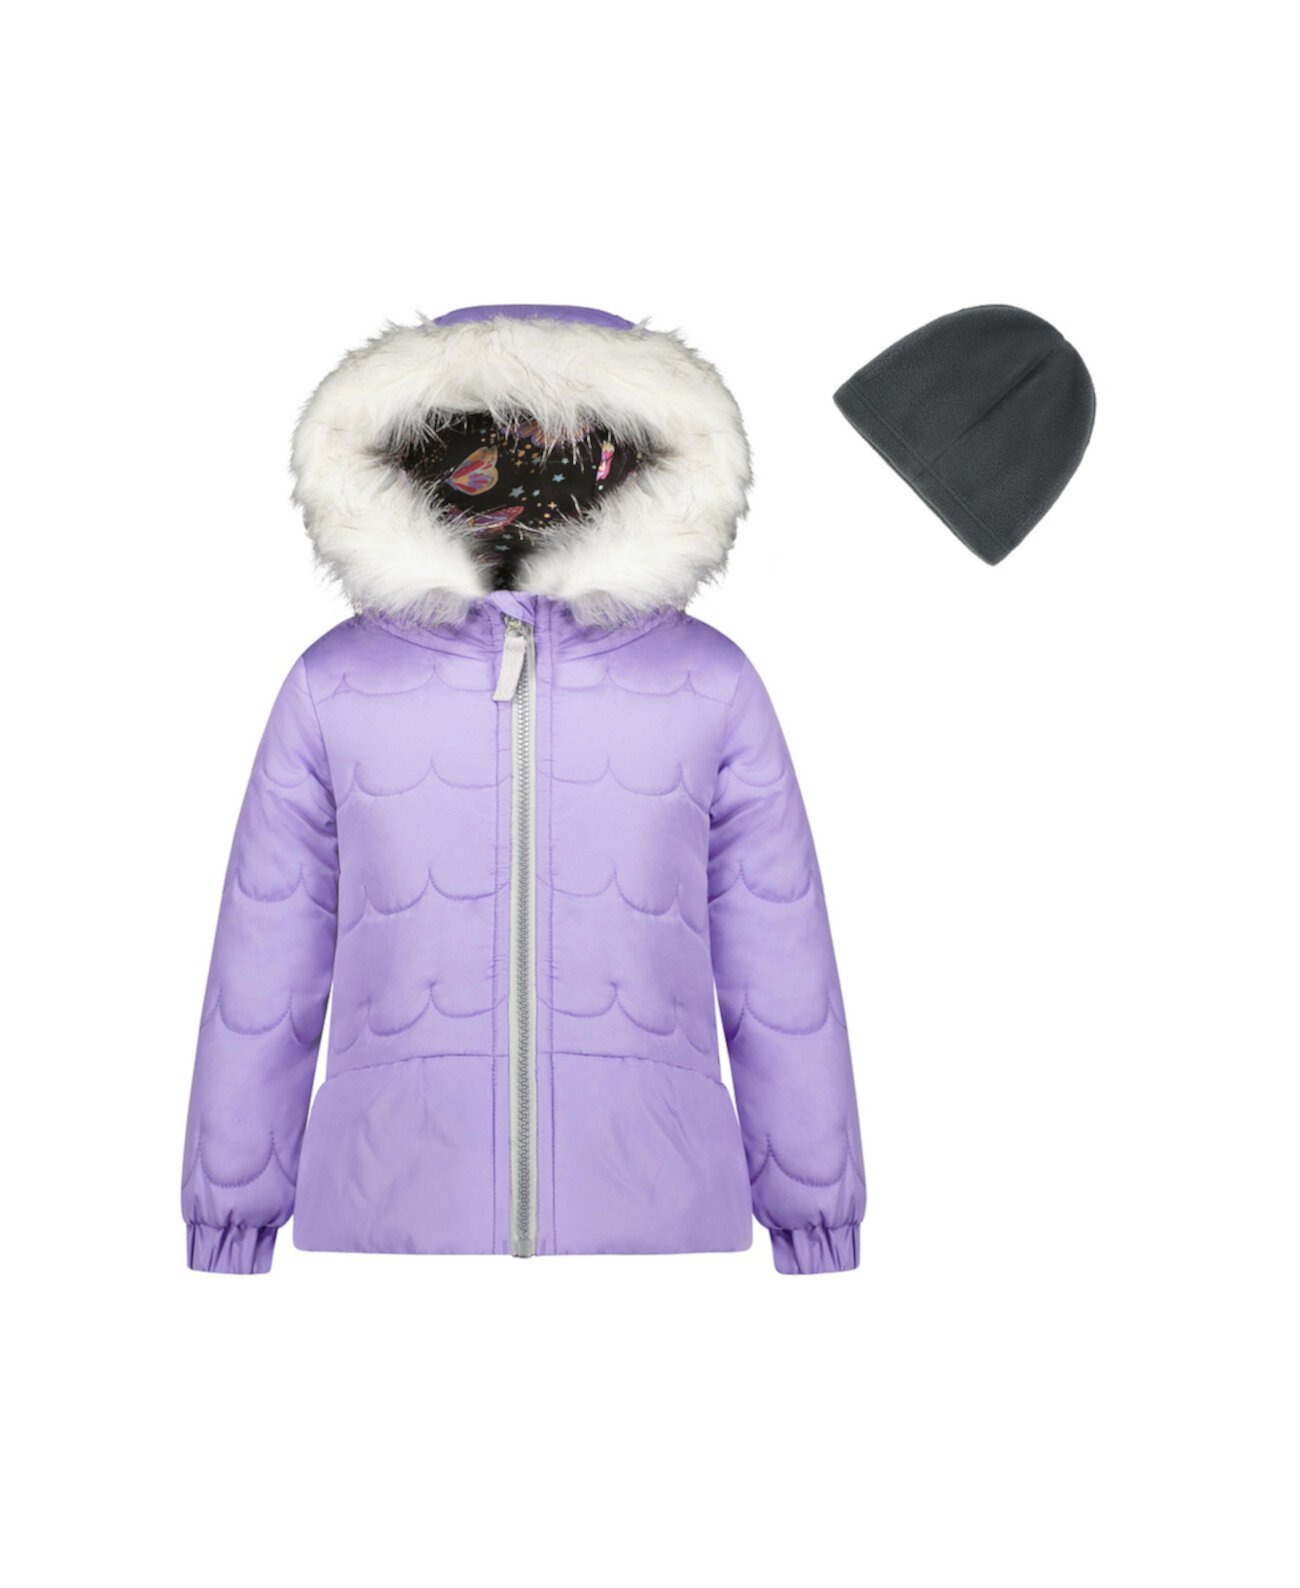 Пальто и шапочка Little Girls Bubble, комплект из 2 предметов Weathertamer